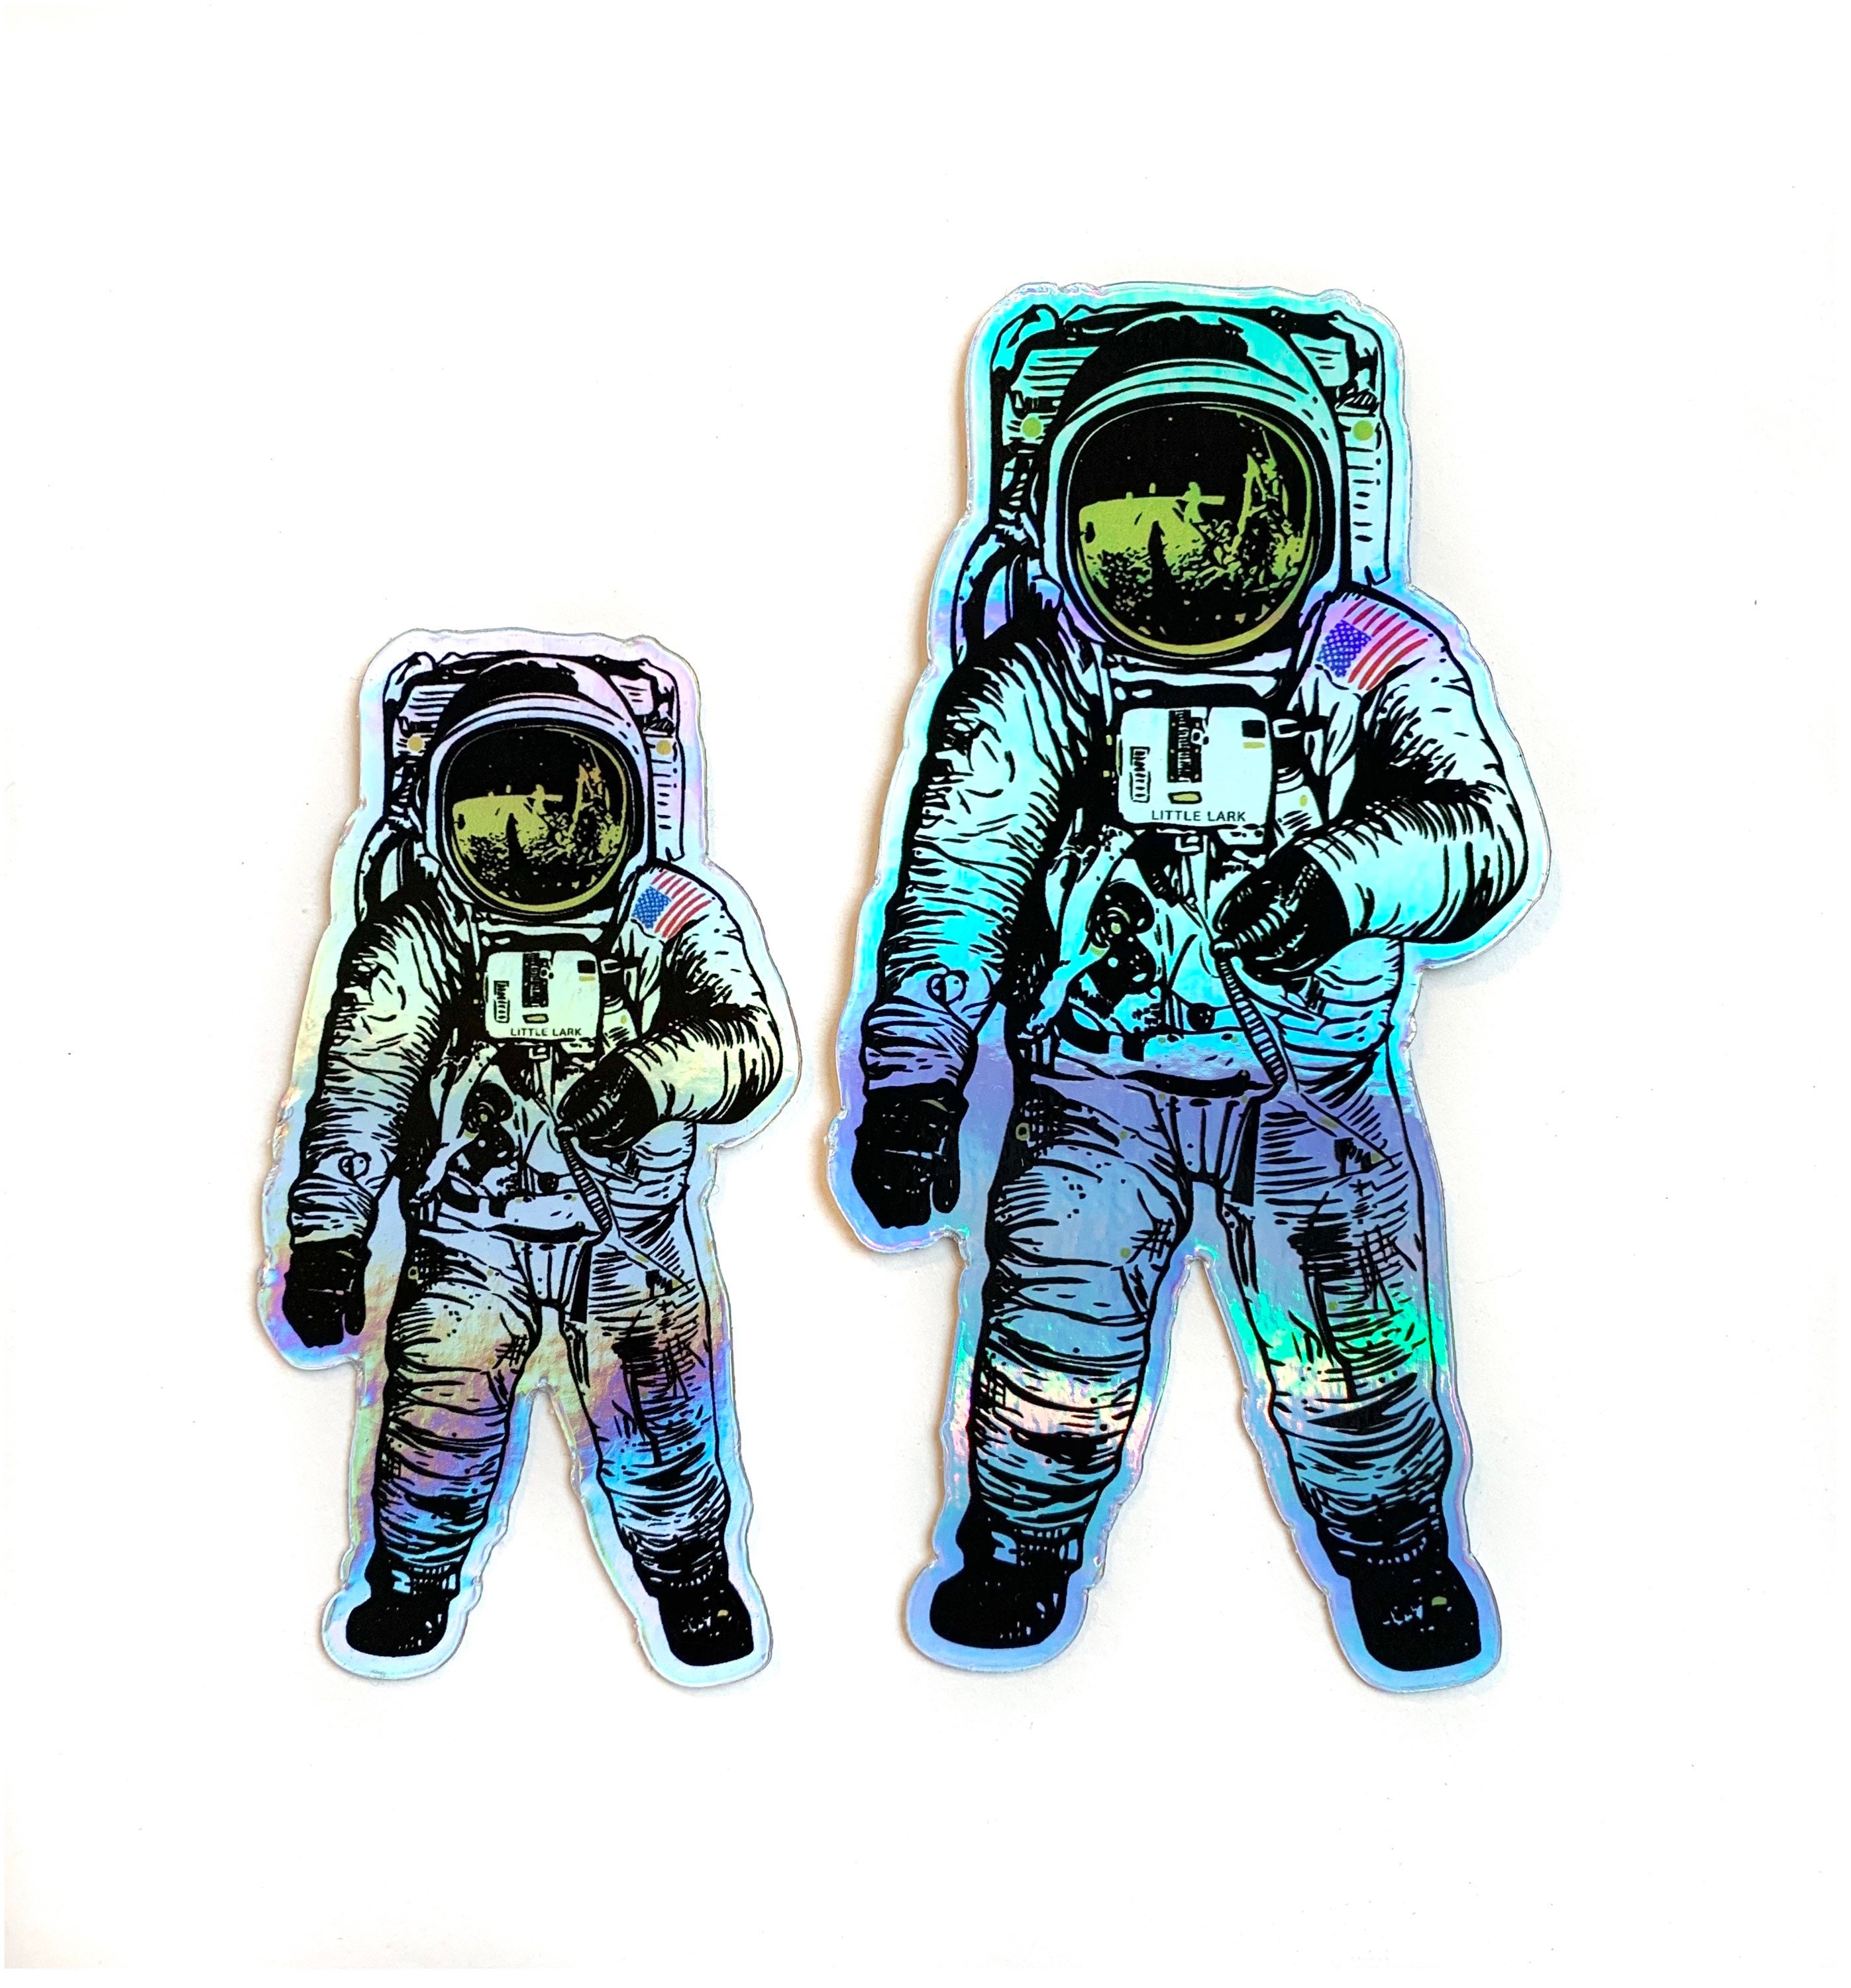 ''SIZES" Space Calling Emblem Astronaut Car Bumper Sticker Decal 